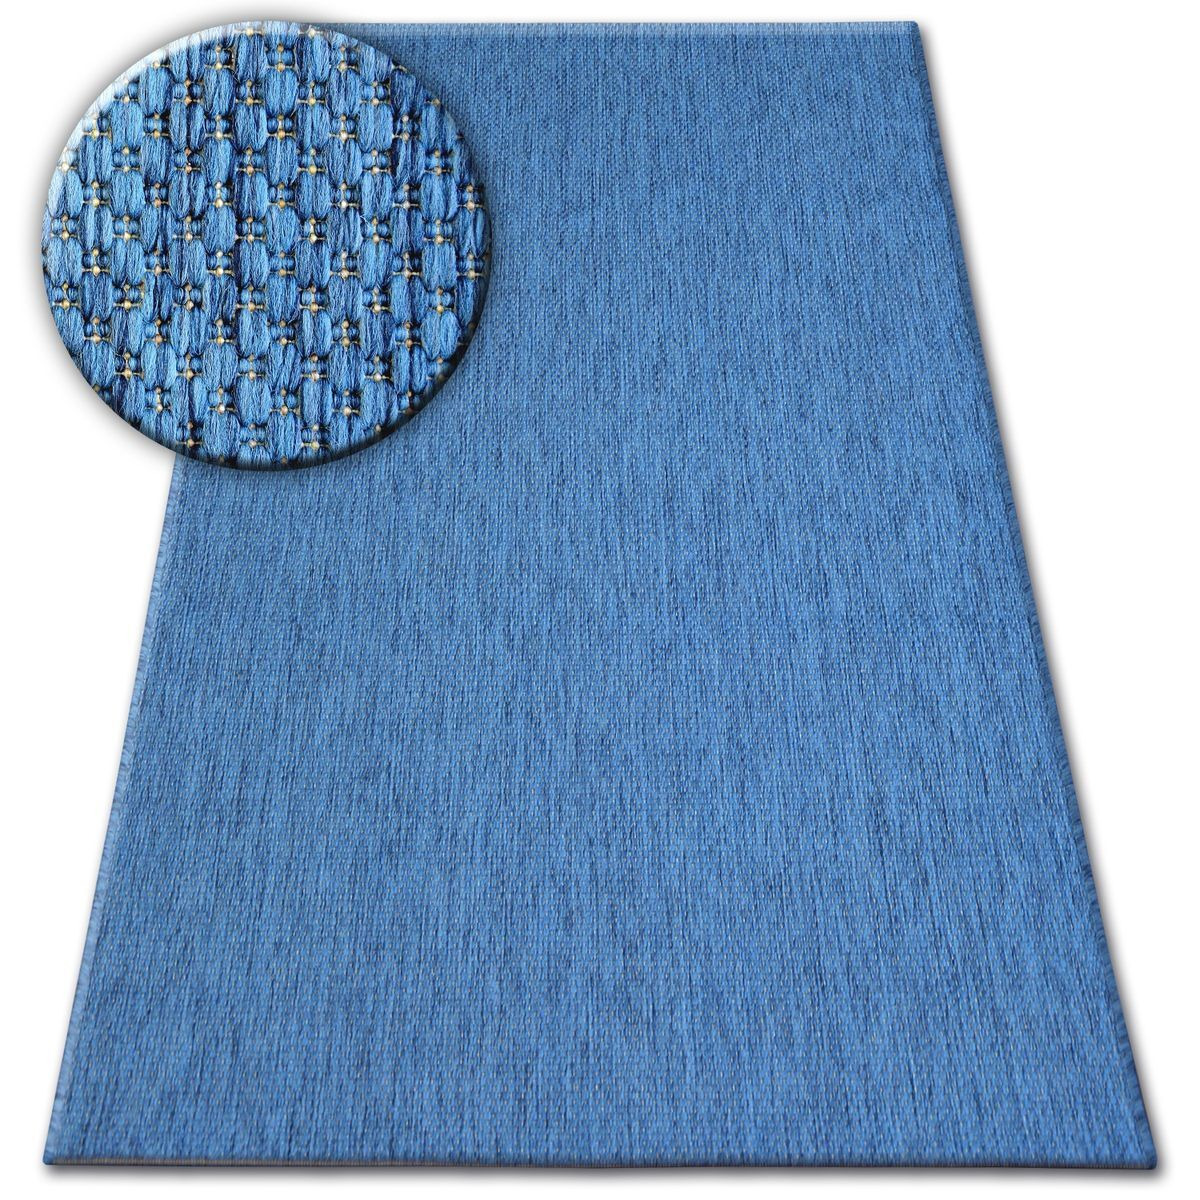 Cika Single Coloured Rug Blue, 80x150 cm - image 1